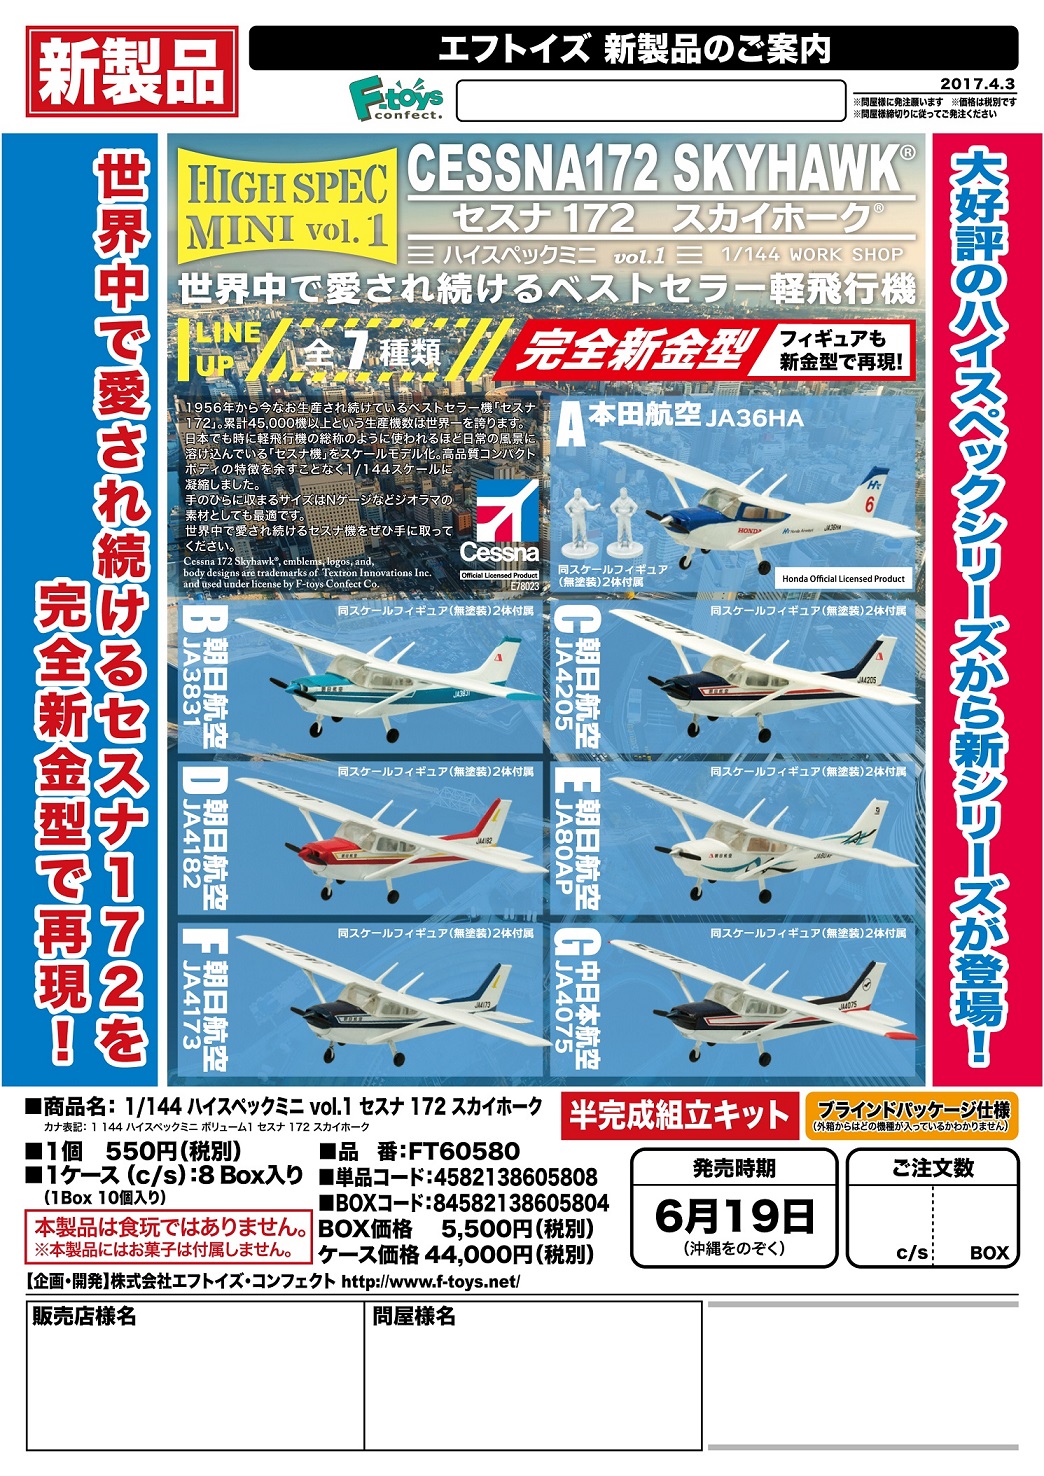 【B】盒蛋 机模 High Spec Mini Vol.1 赛斯纳-172型飞机 全7种 605804